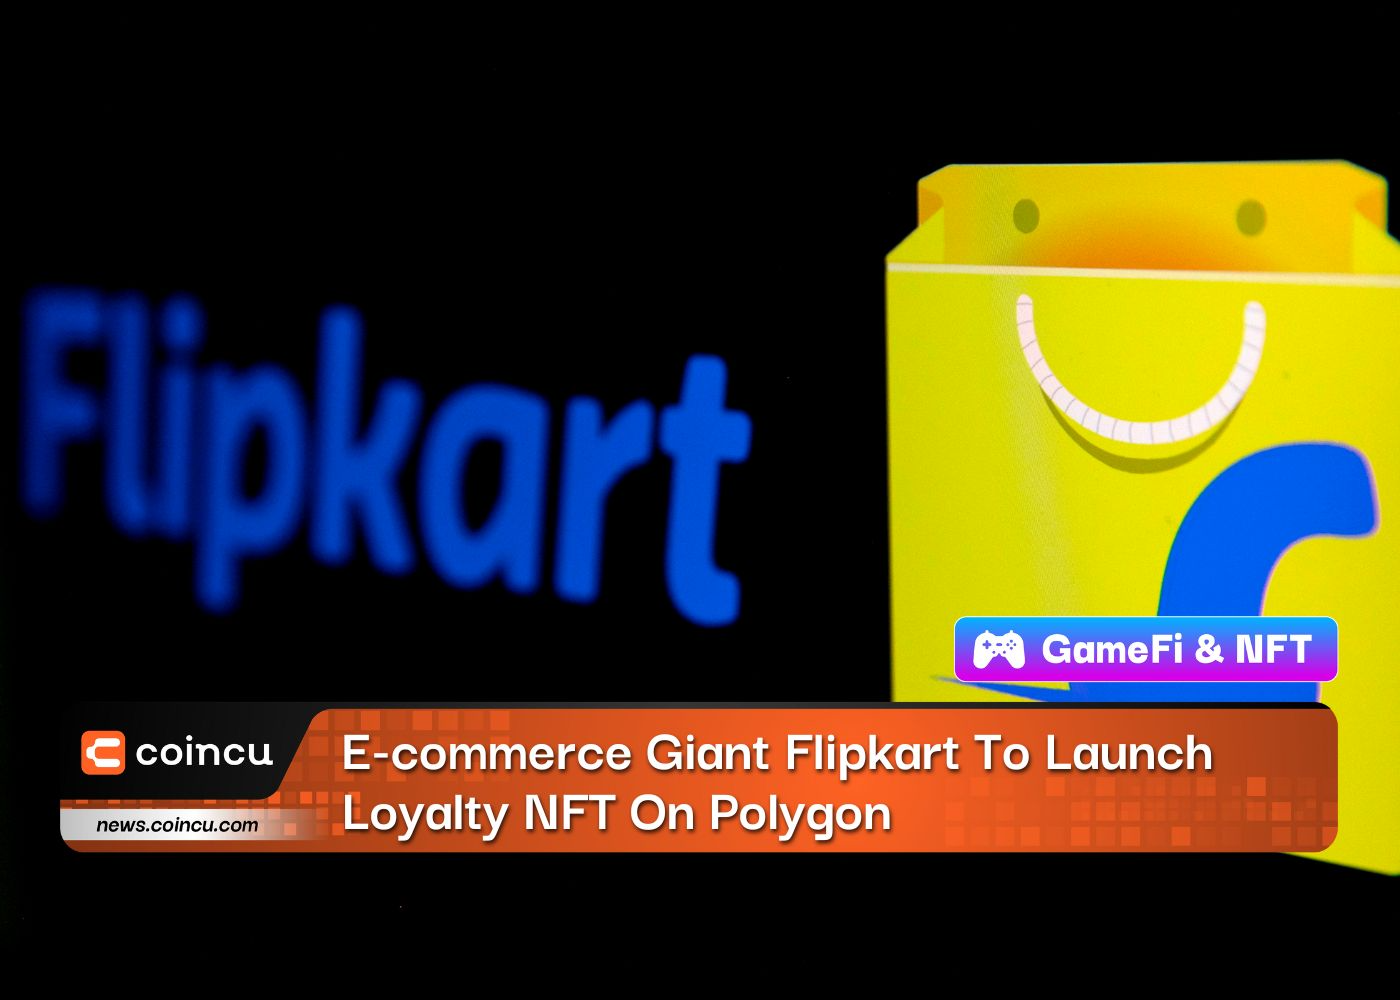 E-commerce Giant Flipkart To Launch Loyalty NFT On Polygon